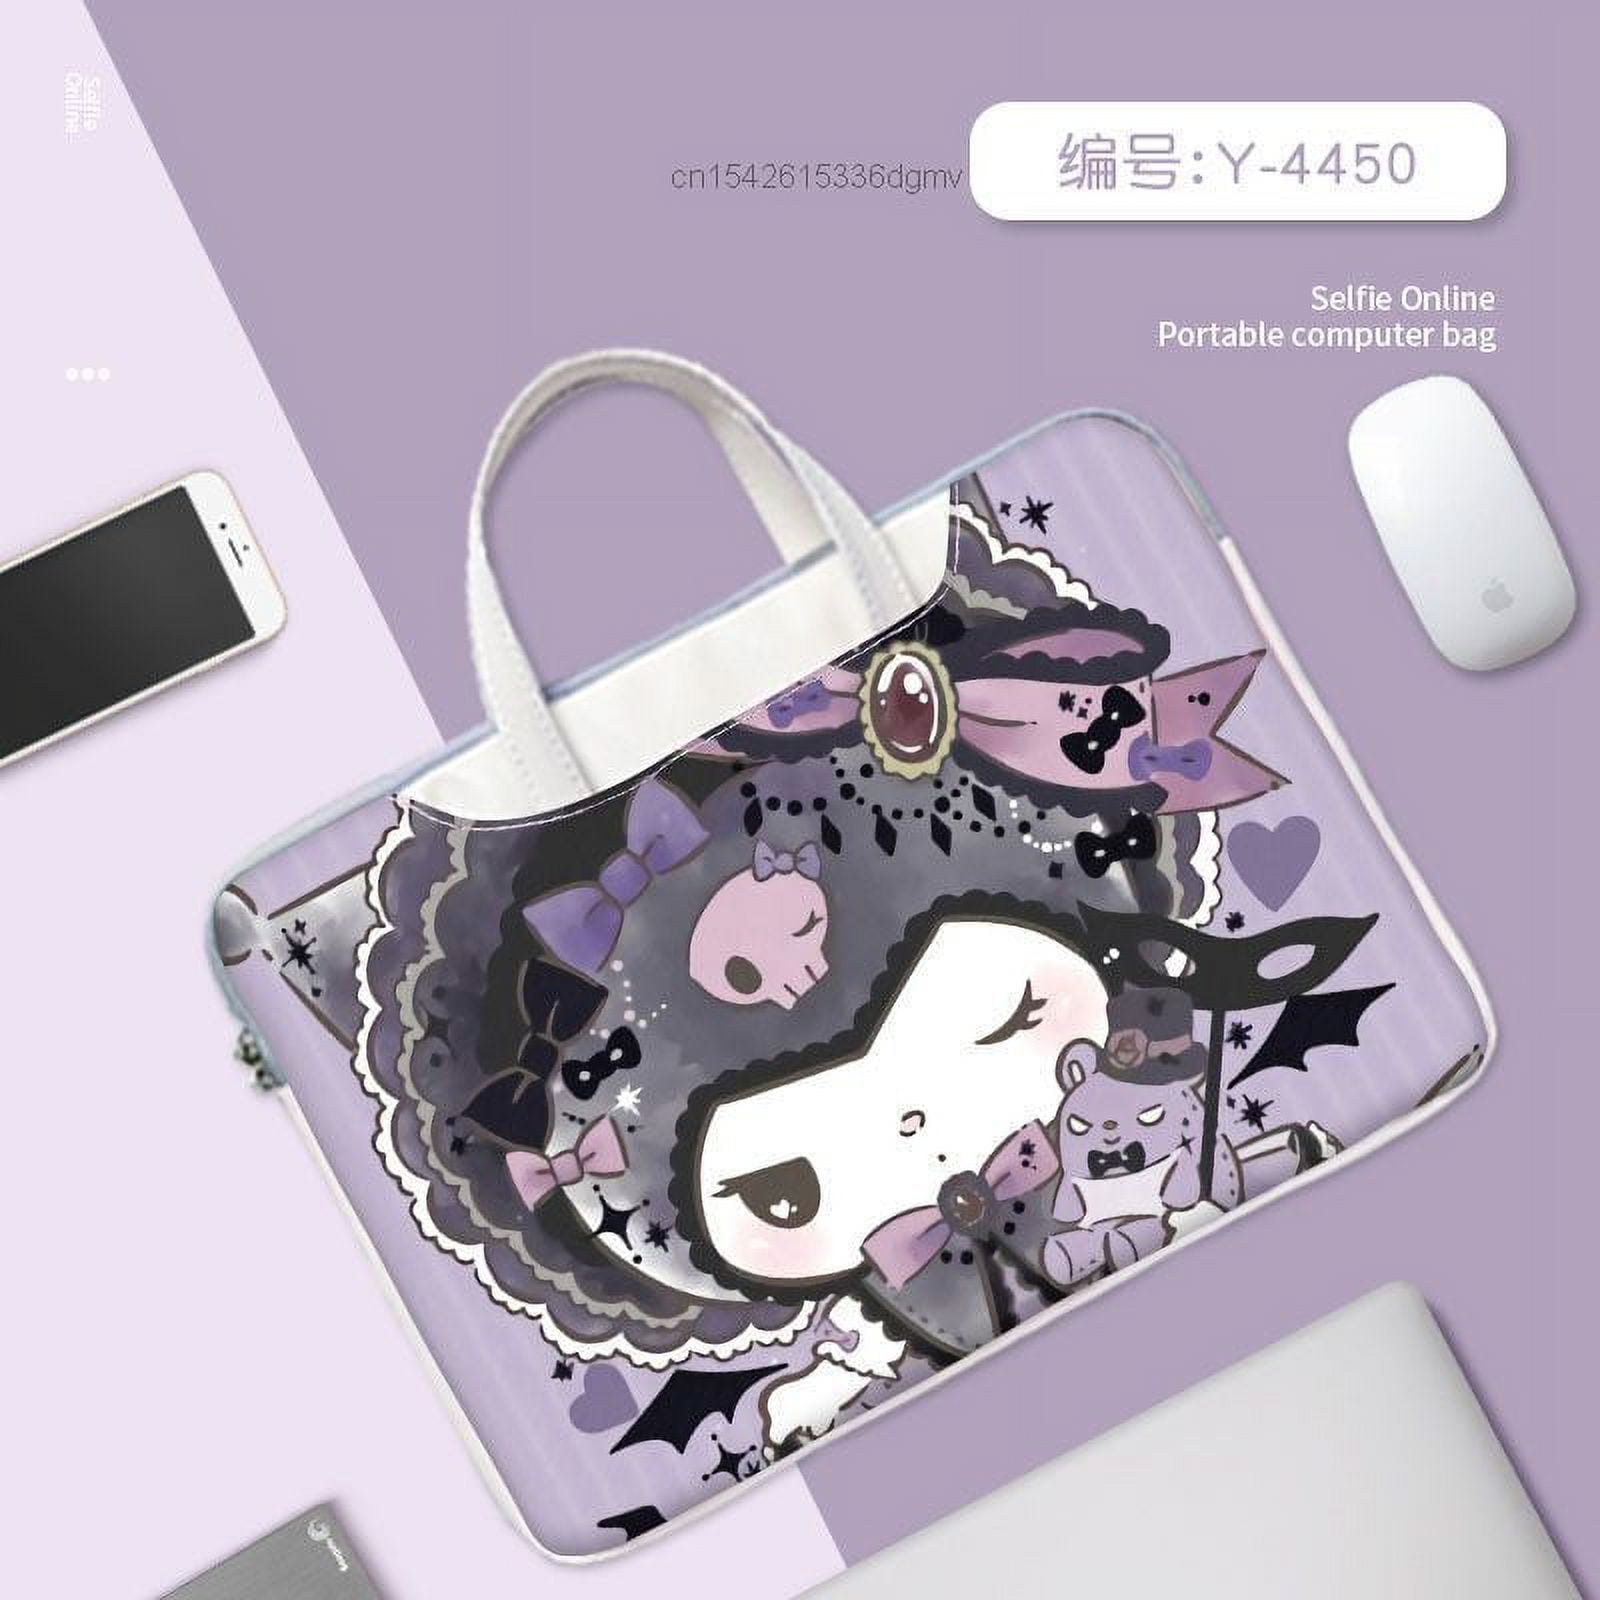 found this cute laptop case at artbox 🤍 : r/sanrio